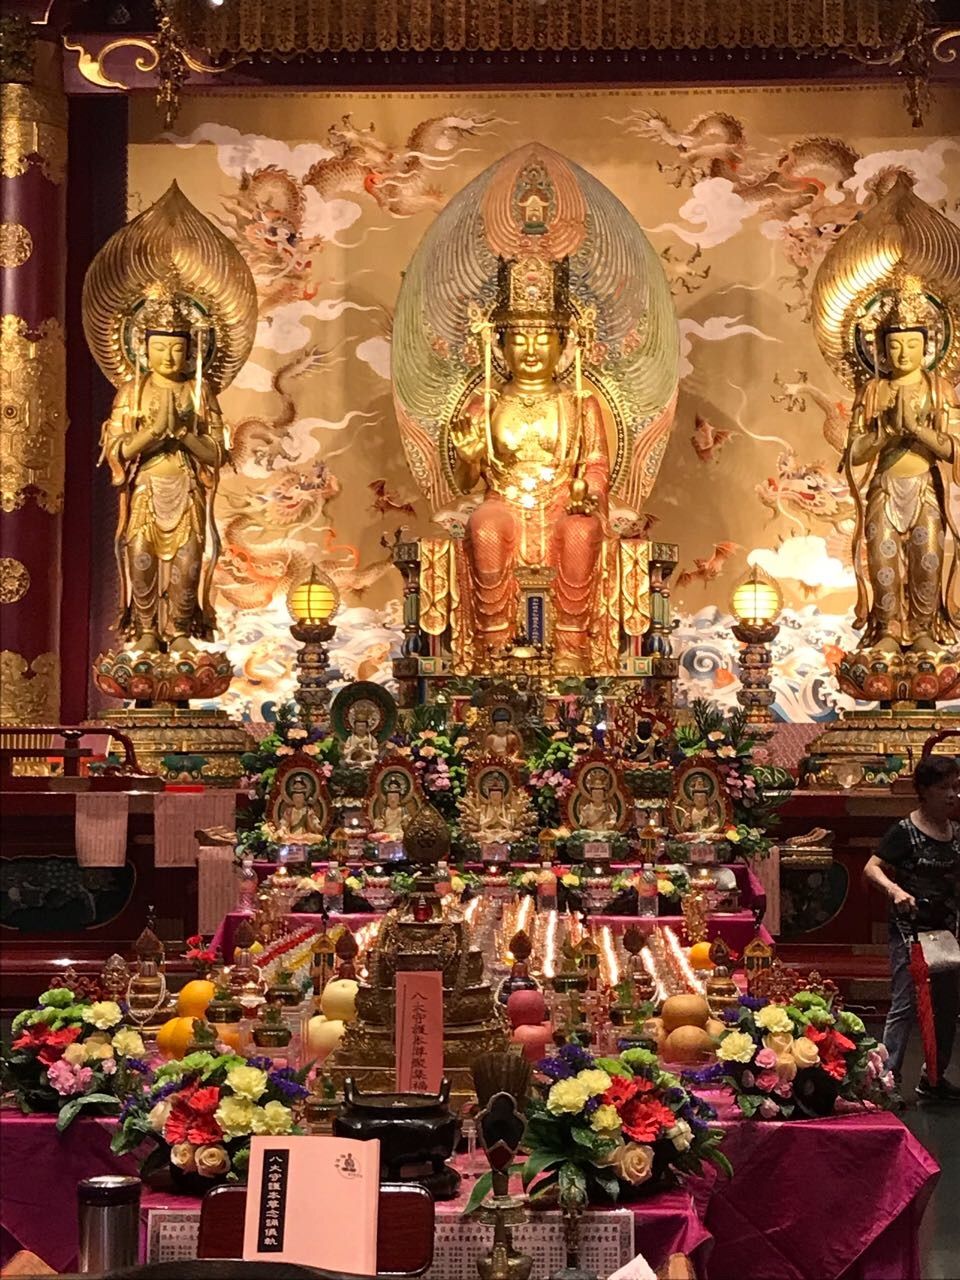 СИНГАПУР. Буддийский храм - New! Фото из кругосветки - краткий дайджест